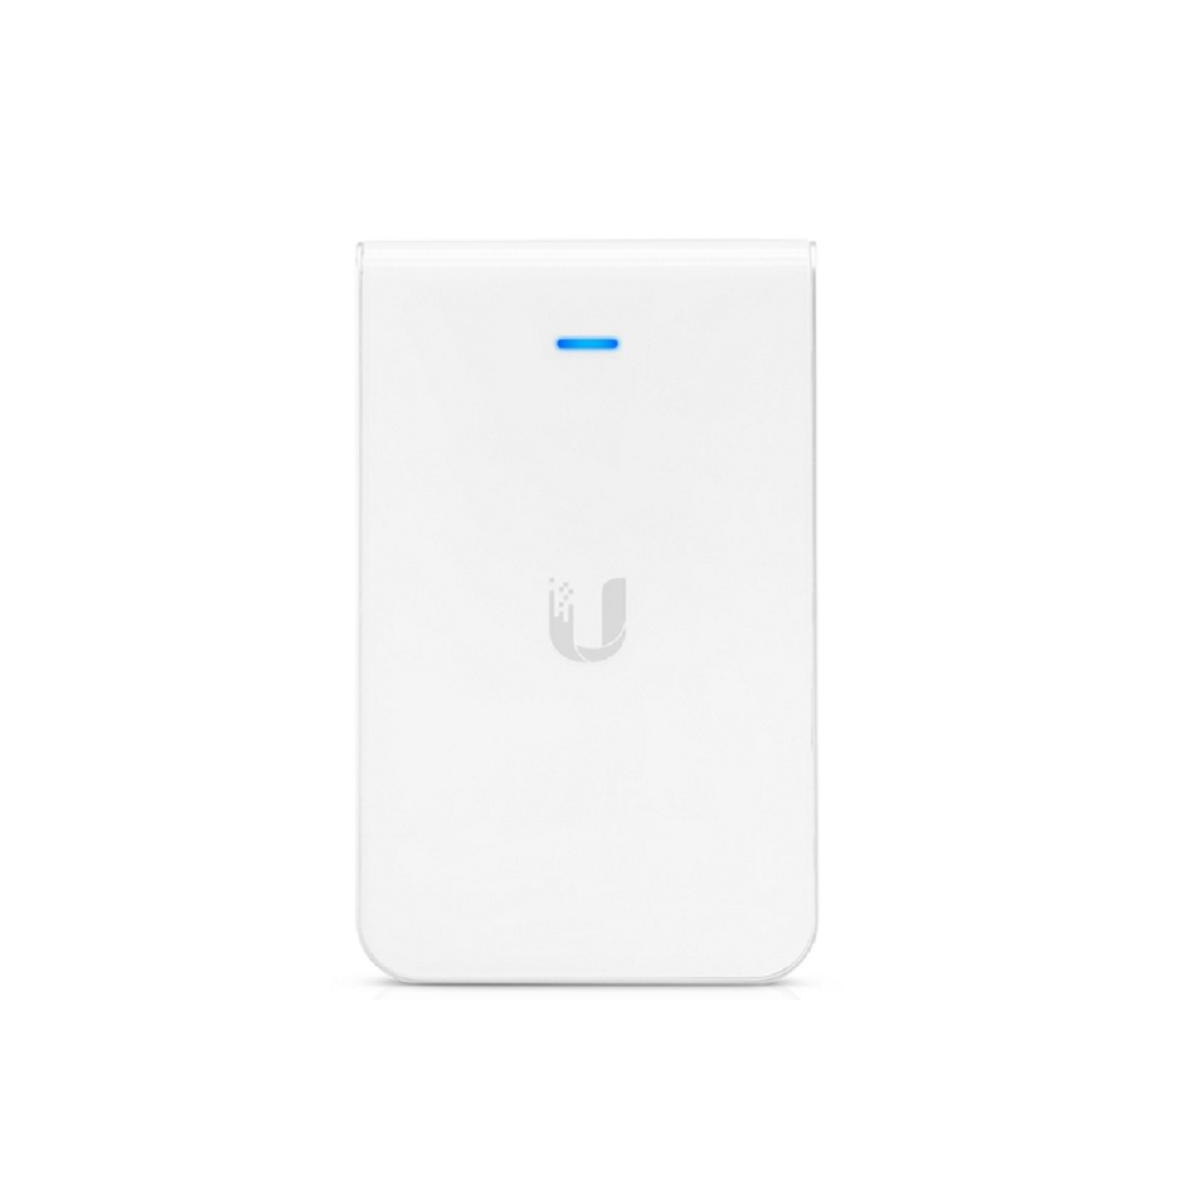 UBIQUITI UBIQUITI UAP-AC-IW Netzwerk & Accesspoints Router Home & Controller Smart